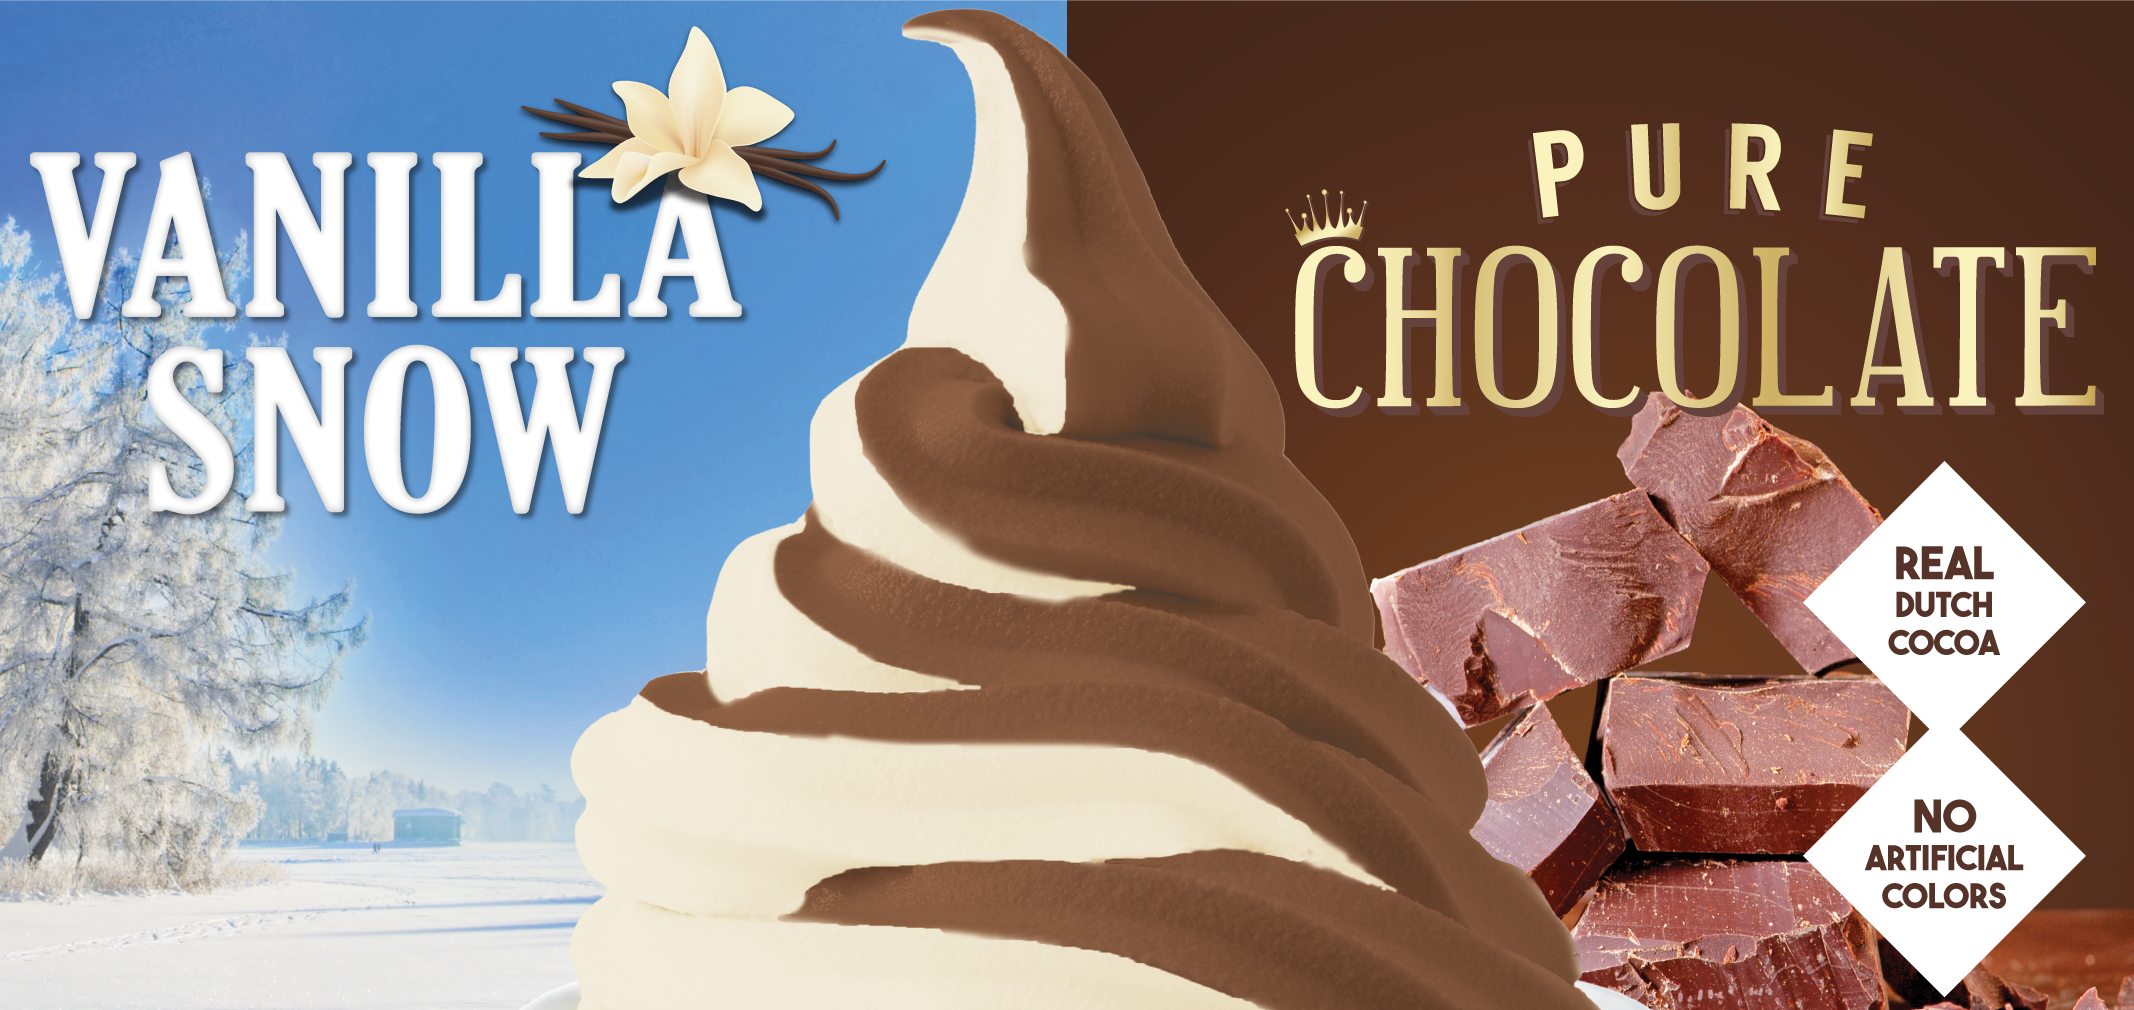 vanilla snow and pure chocolate swirl label image